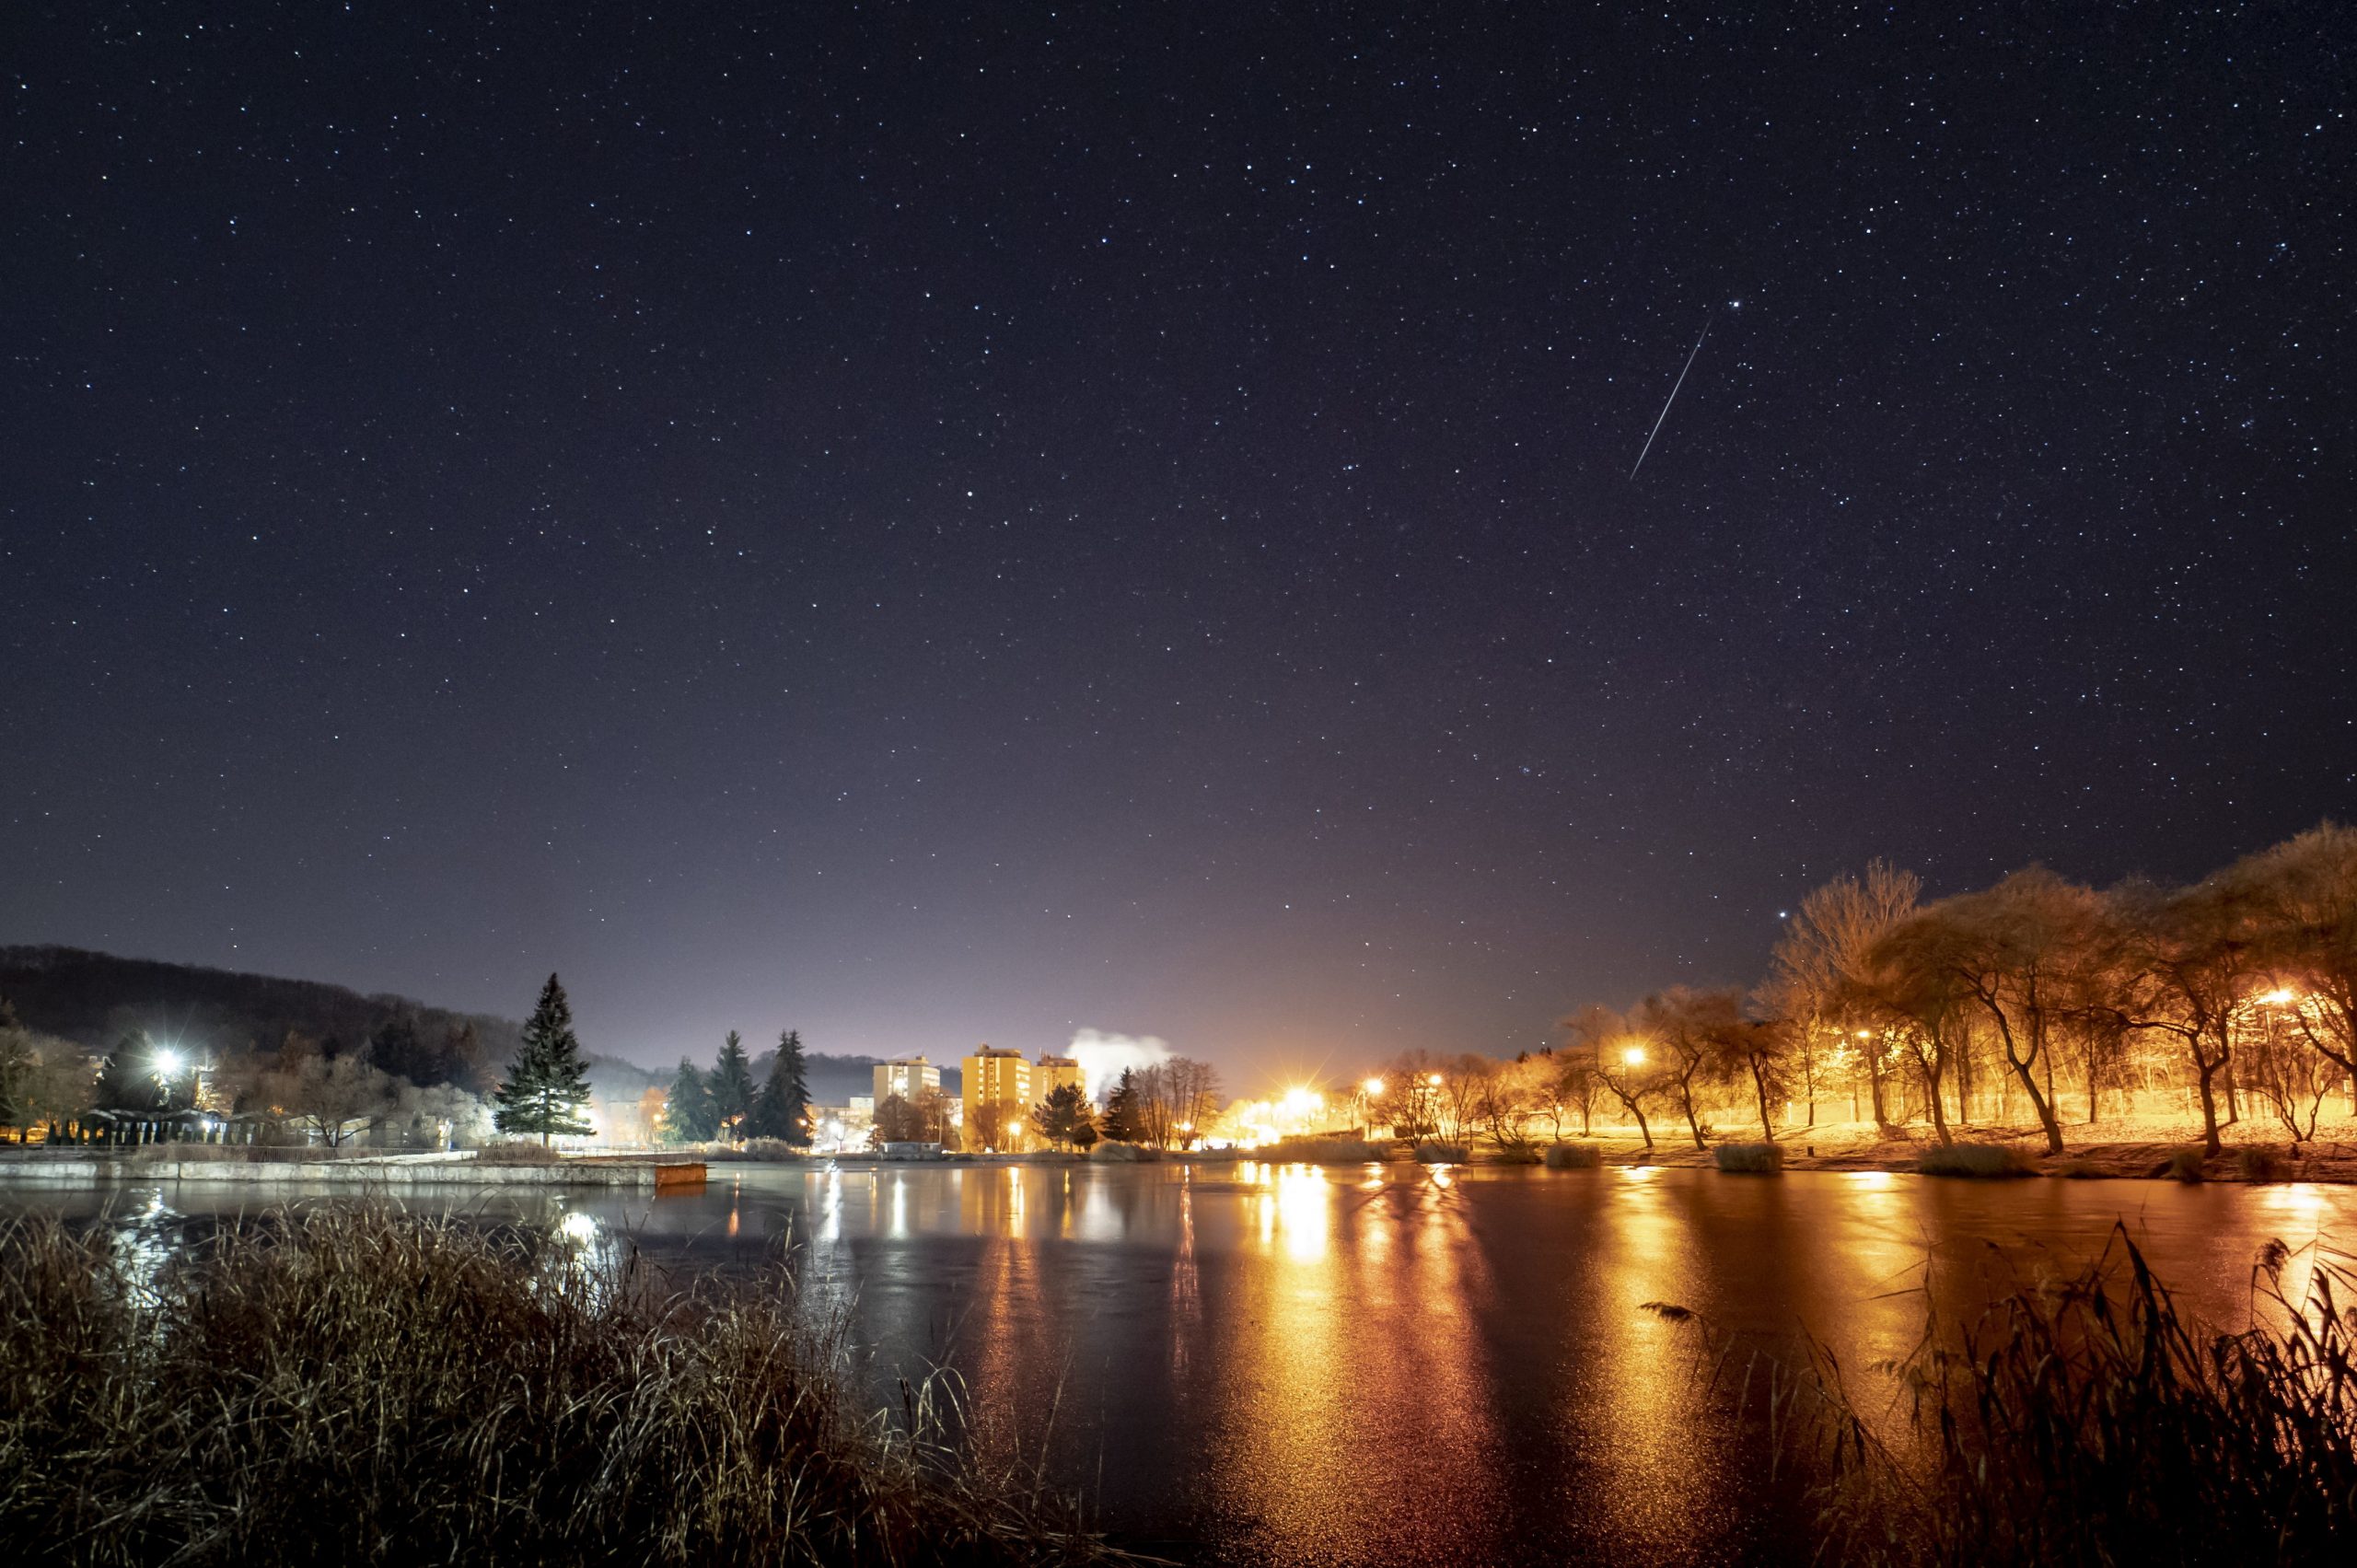 Geminids 'Shooting Stars' Make Night Sky over Hungary Especially Beautiful